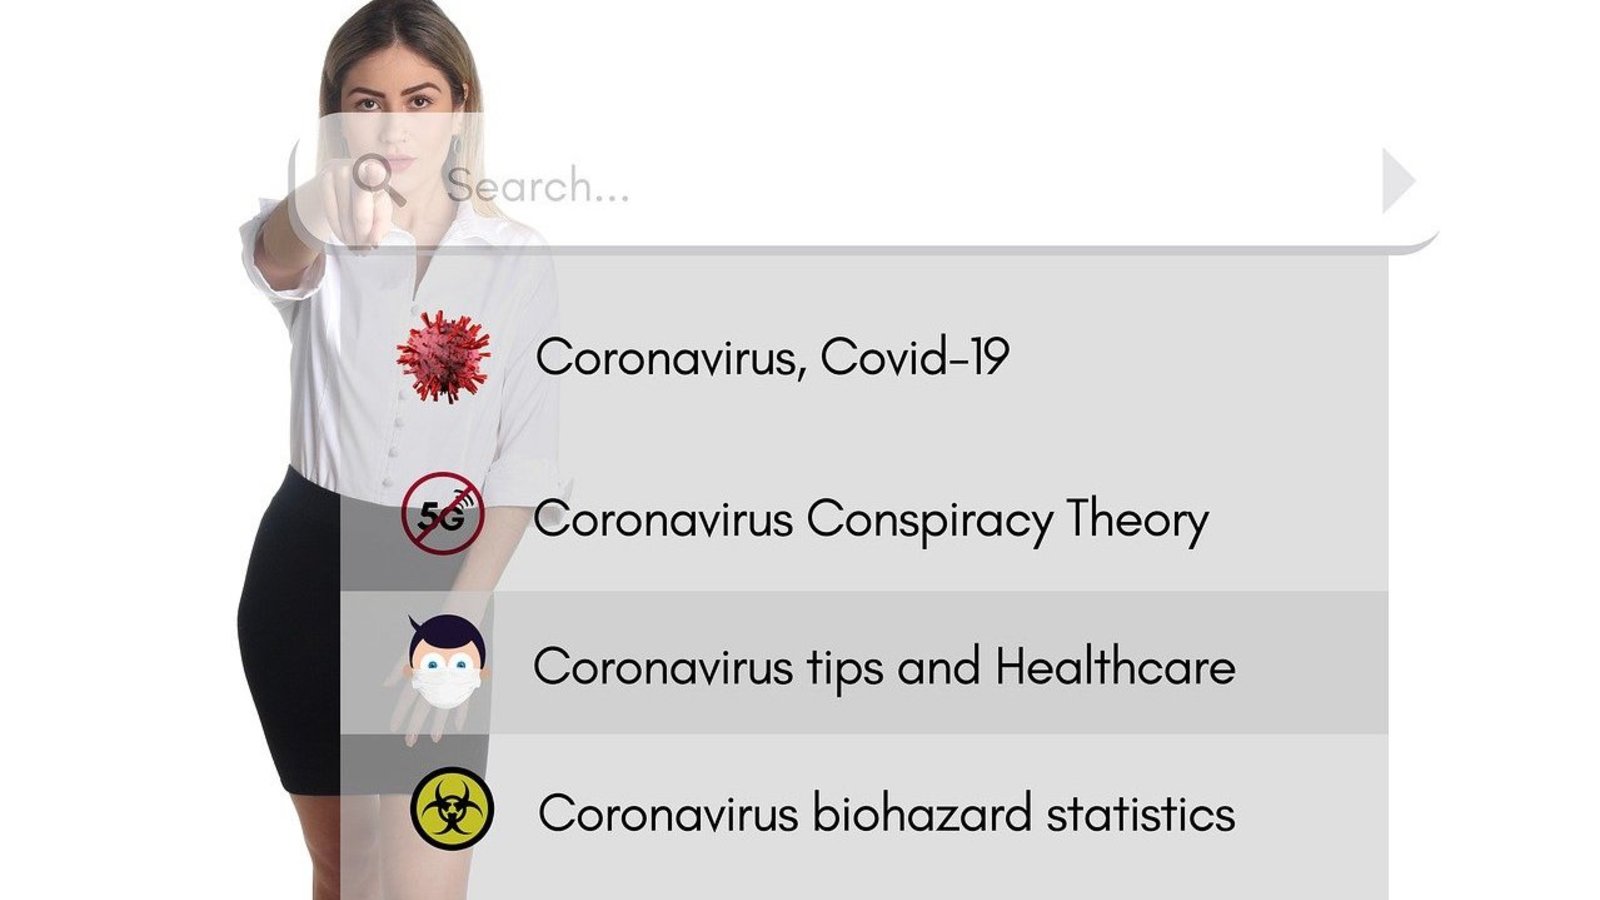 coronavirus-rechercheGoogle.jpg